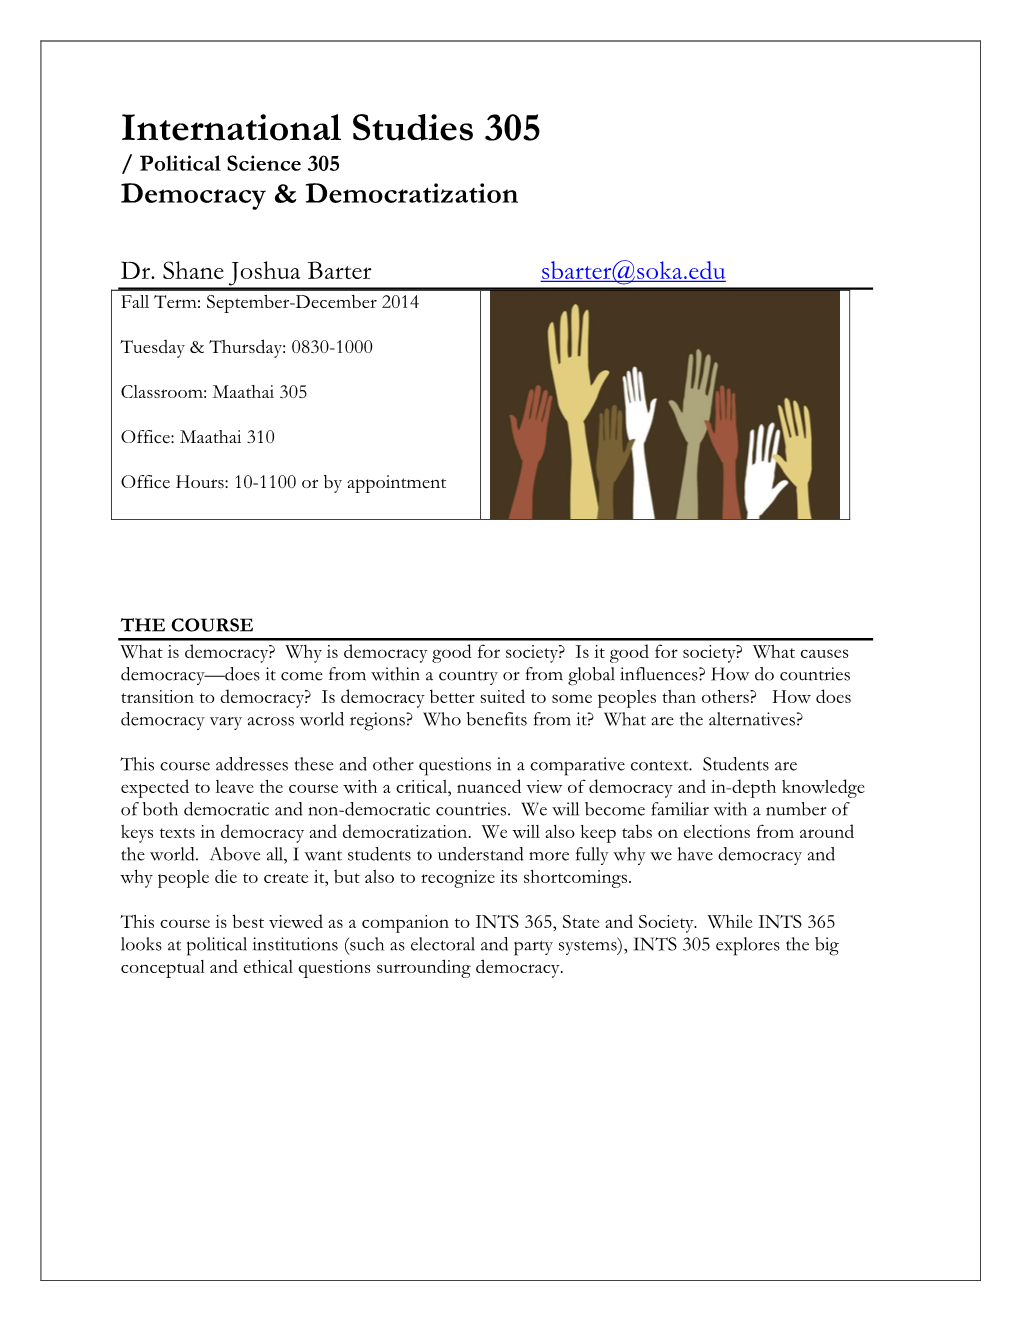 International Studies 305 / Political Science 305 Democracy & Democratization